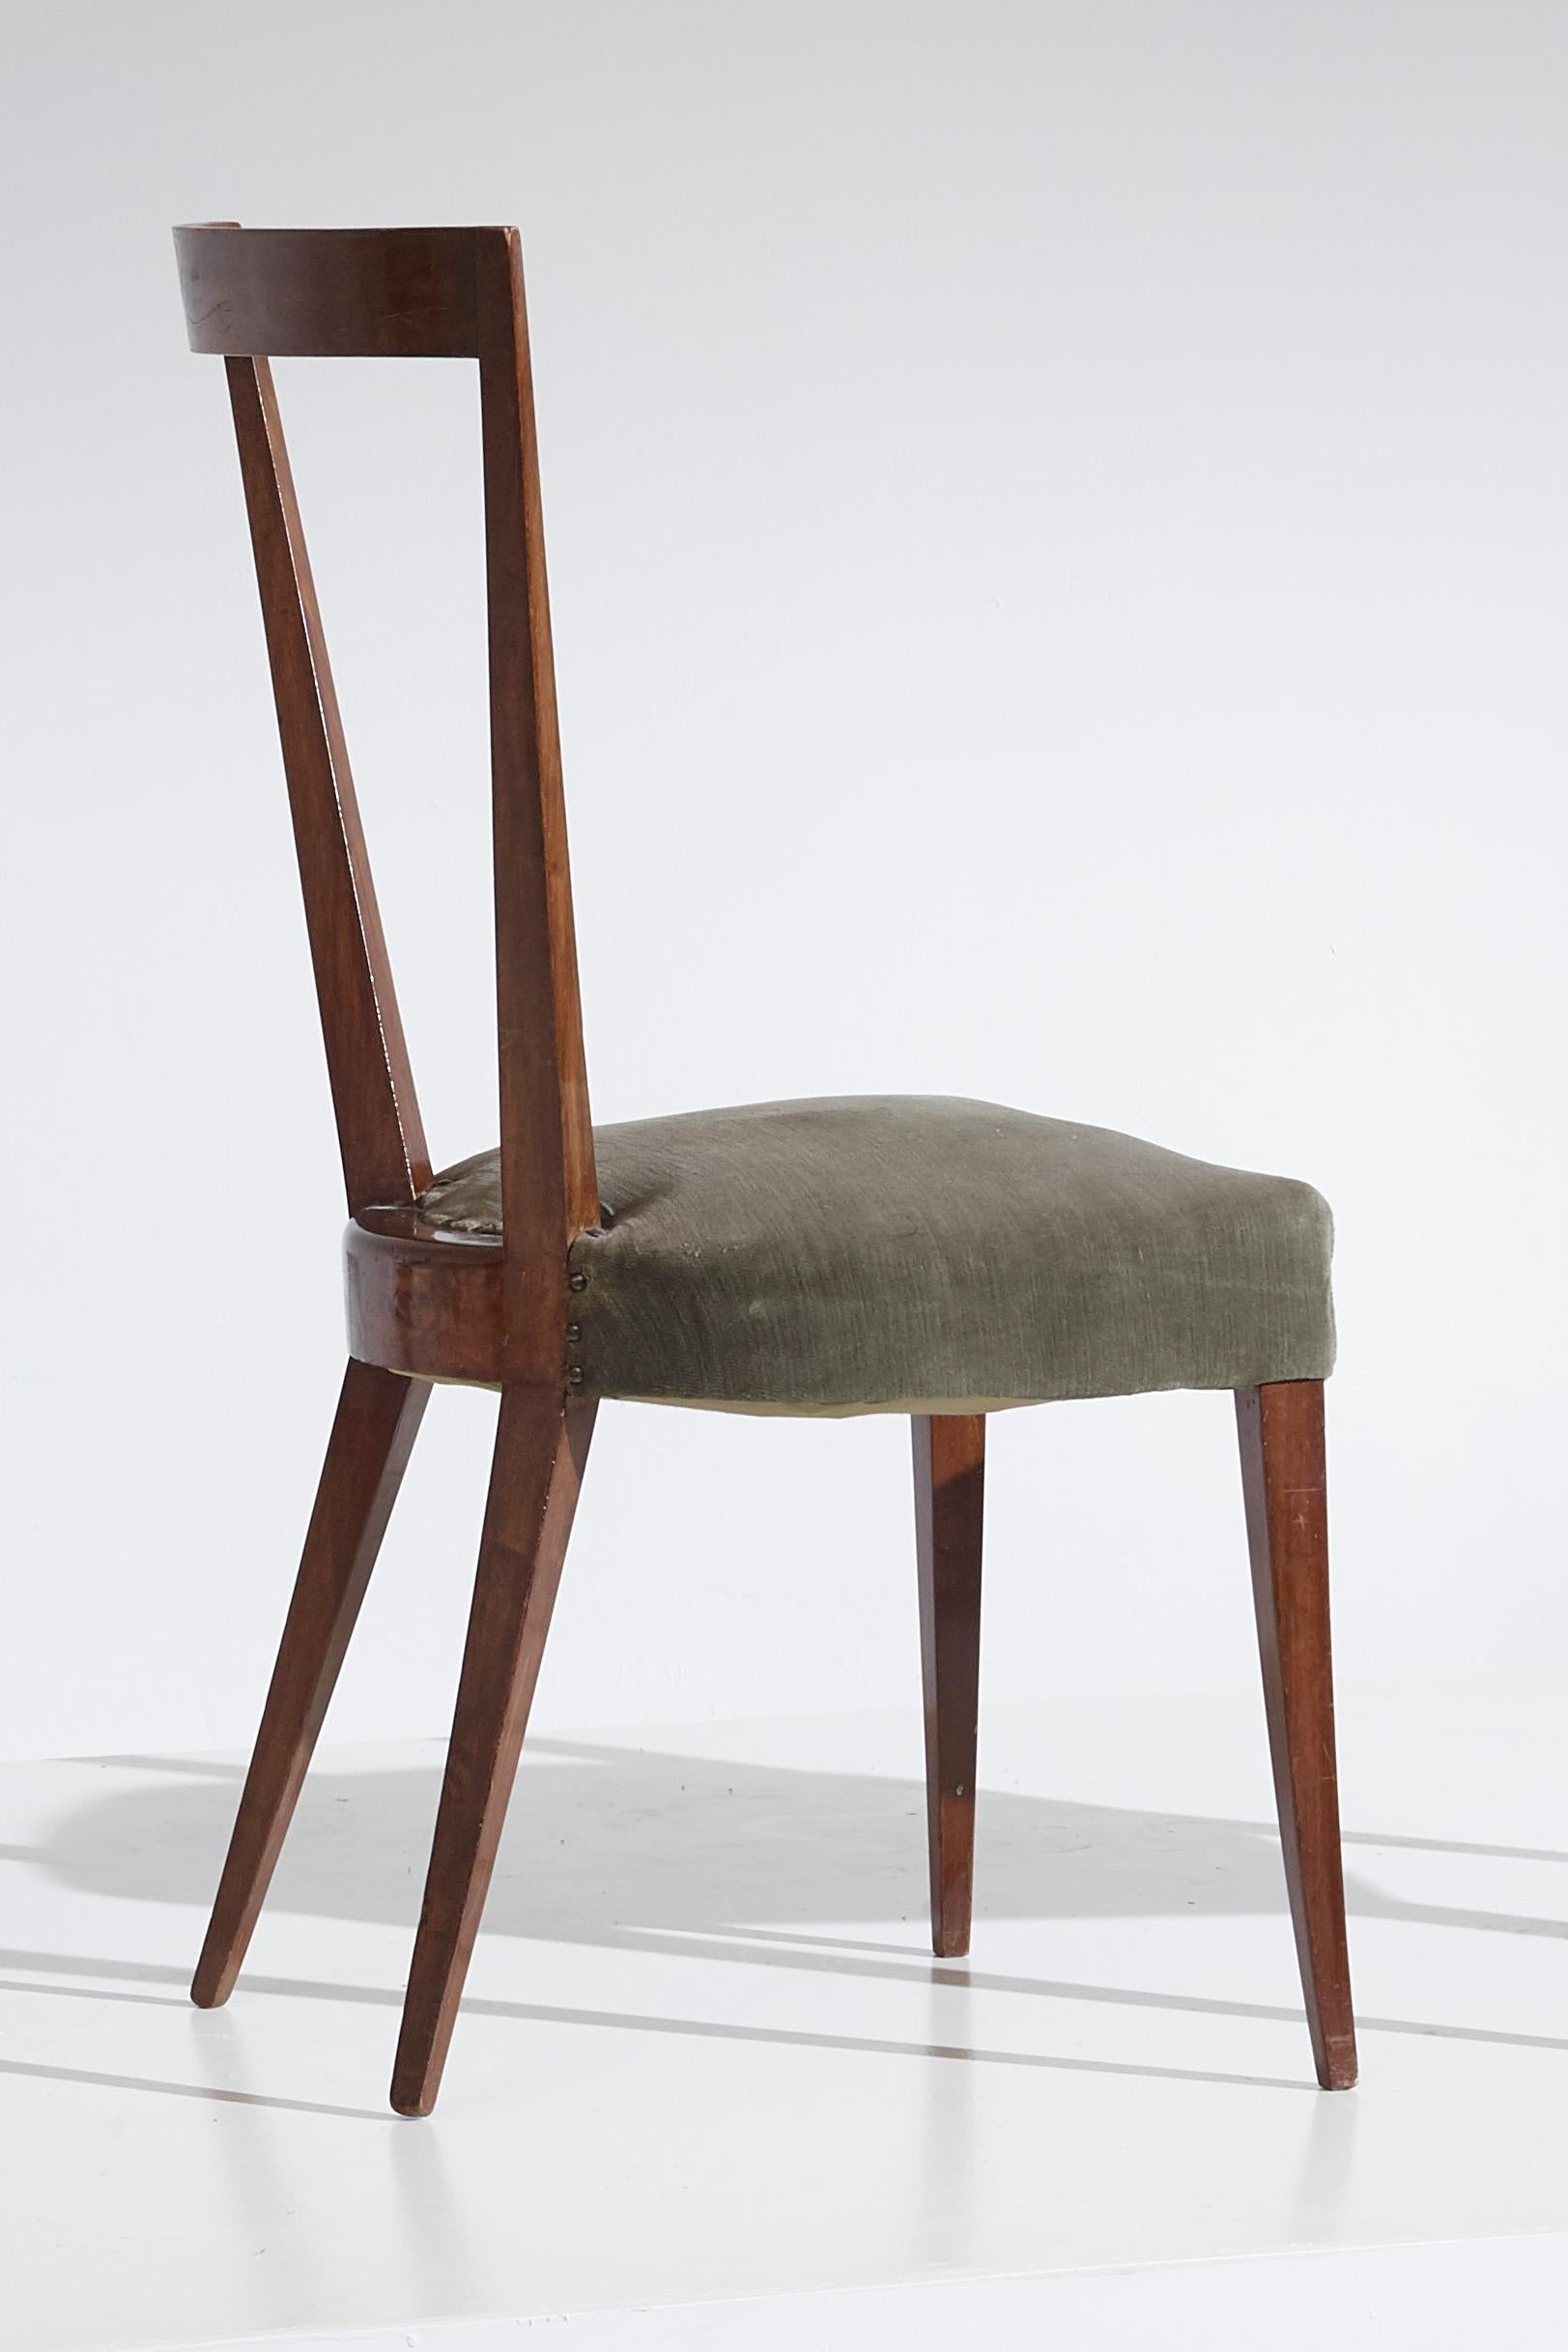 Gio Ponti for Casa E Giardino 1938 - Set of 4 Chairs in Walnut and Velvet Fabric 3